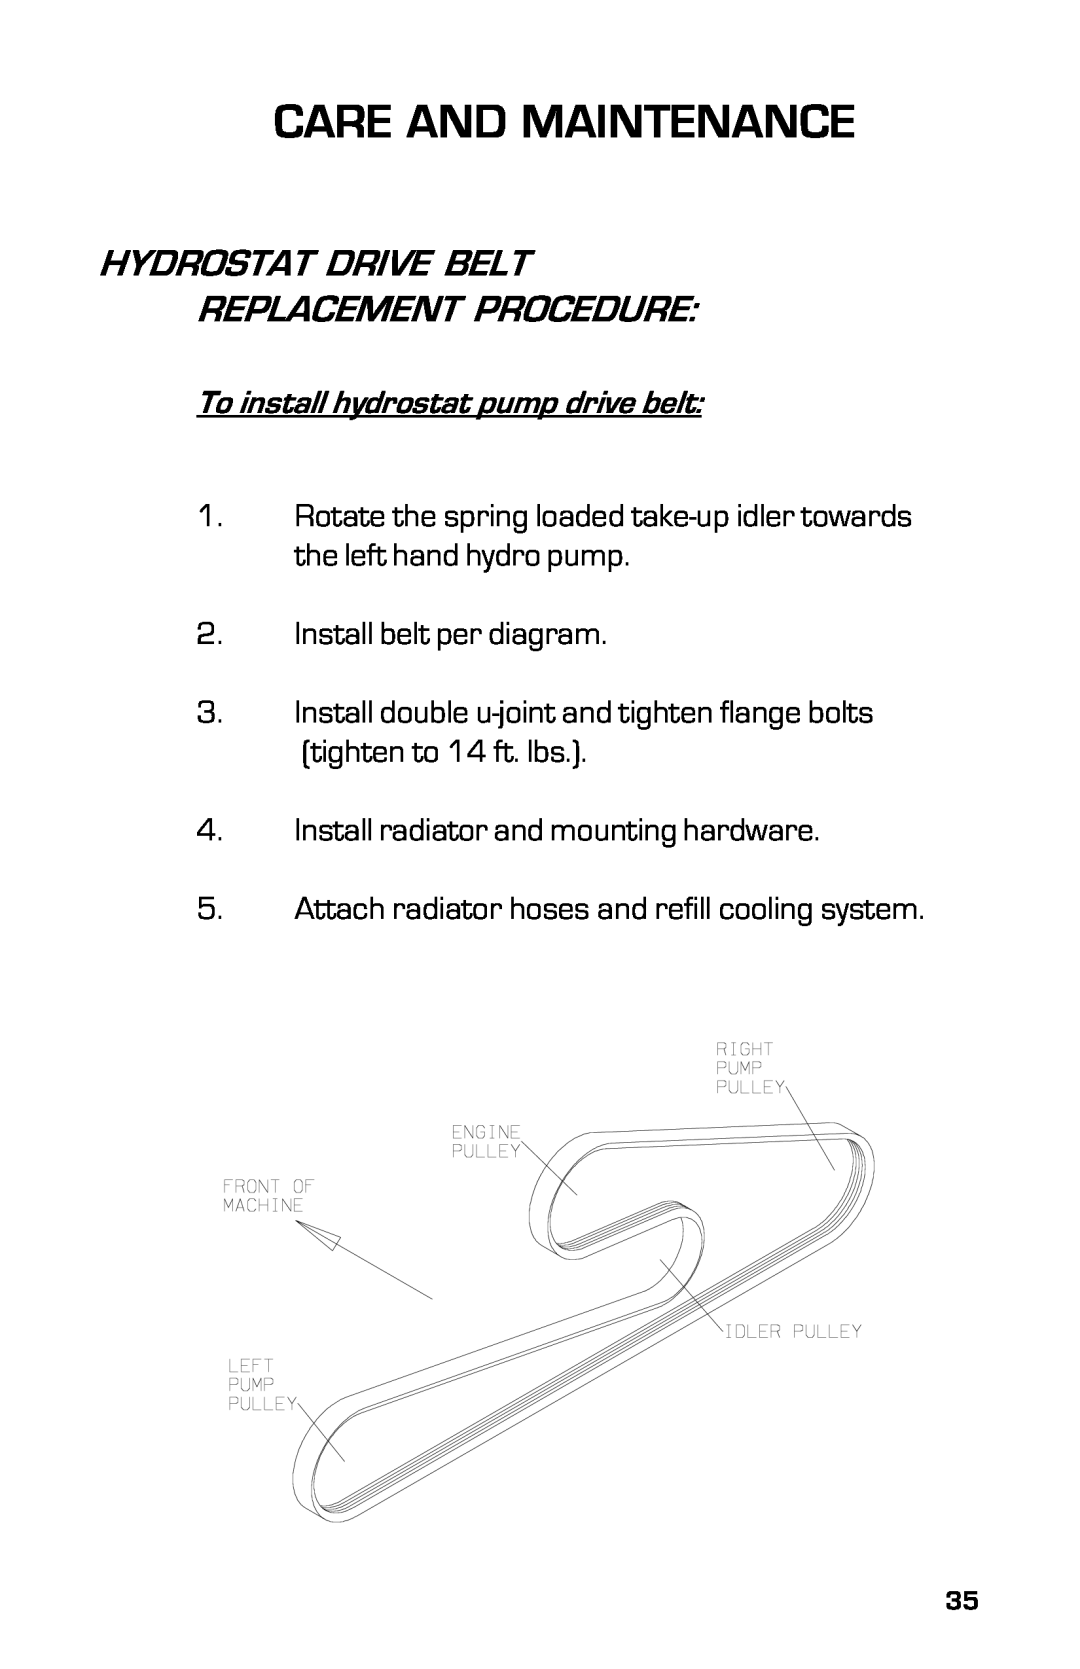 Dixon 8000D manual Hydrostat Drive Belt Replacement Procedure, Care And Maintenance, To install hydrostat pump drive belt 